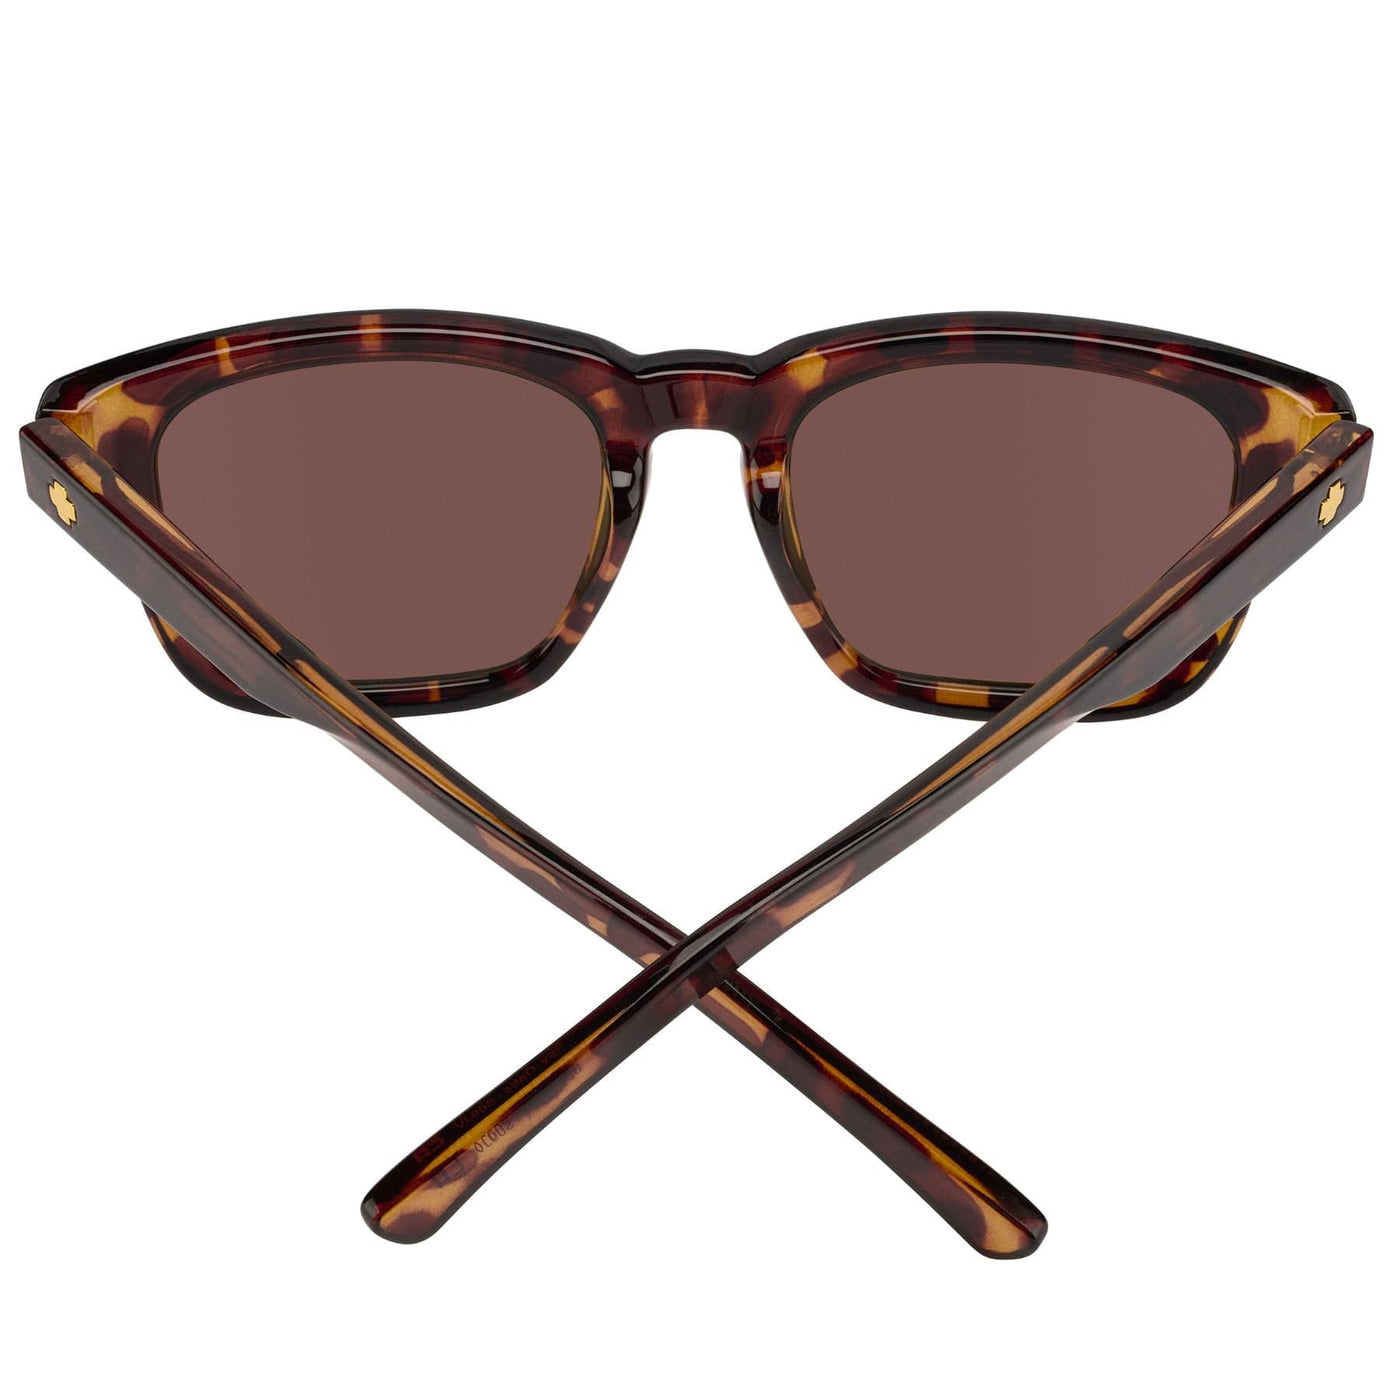 SPY SAXONY Polarized Sunglasses, Happy BOOST - Bronze 8Lines Shop - Fast Shipping